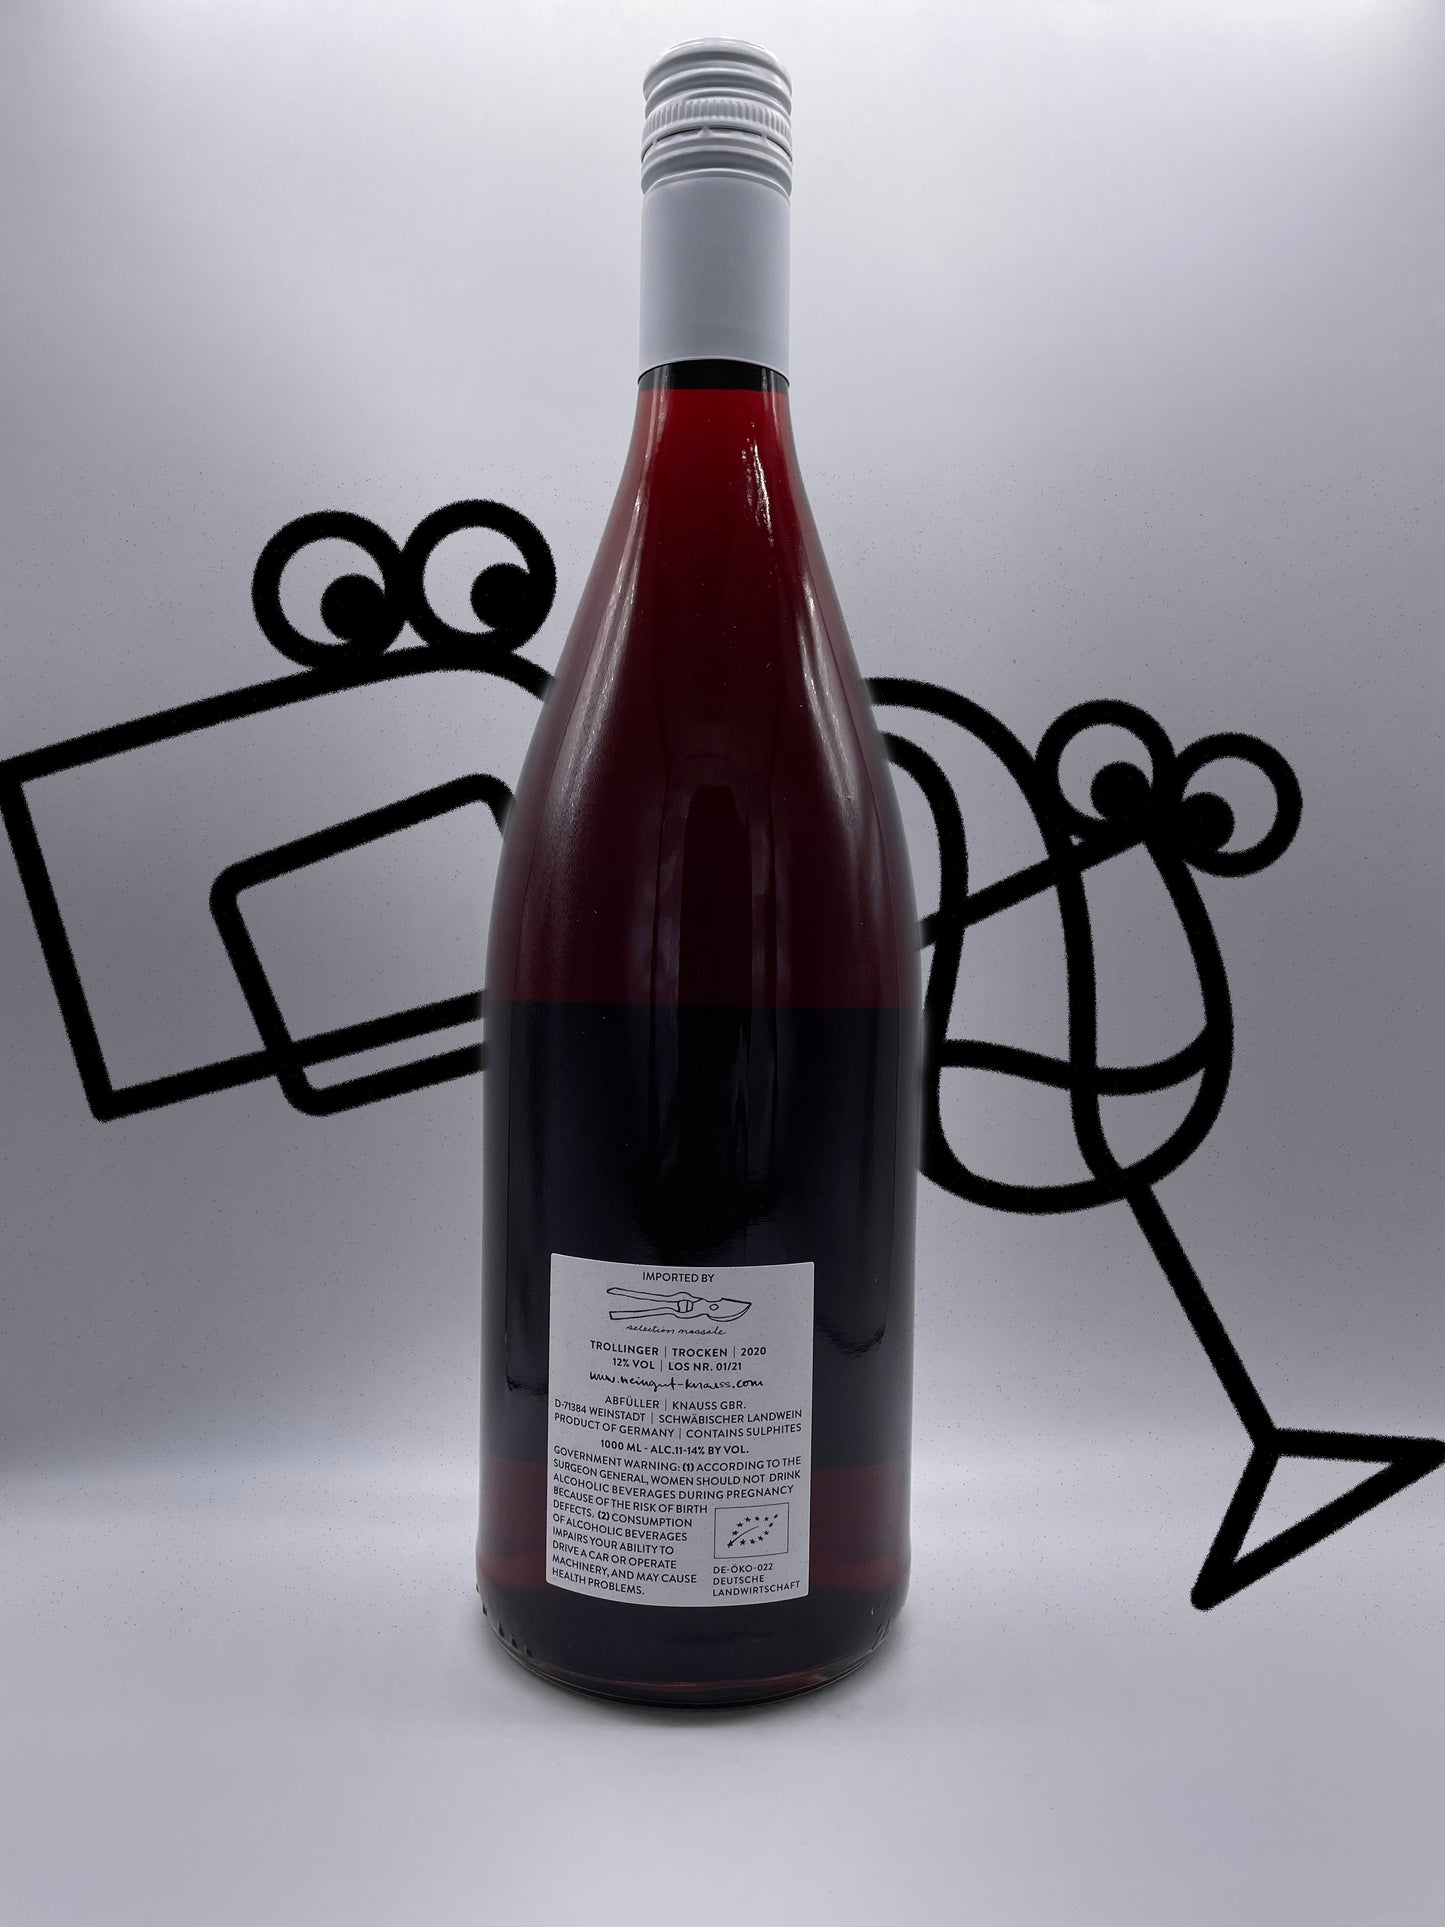 Andi Knauss 'La Boutanche' Trollinger Strümpfelbach, Germany 2020 1L - Williston Park Wines & Spirits